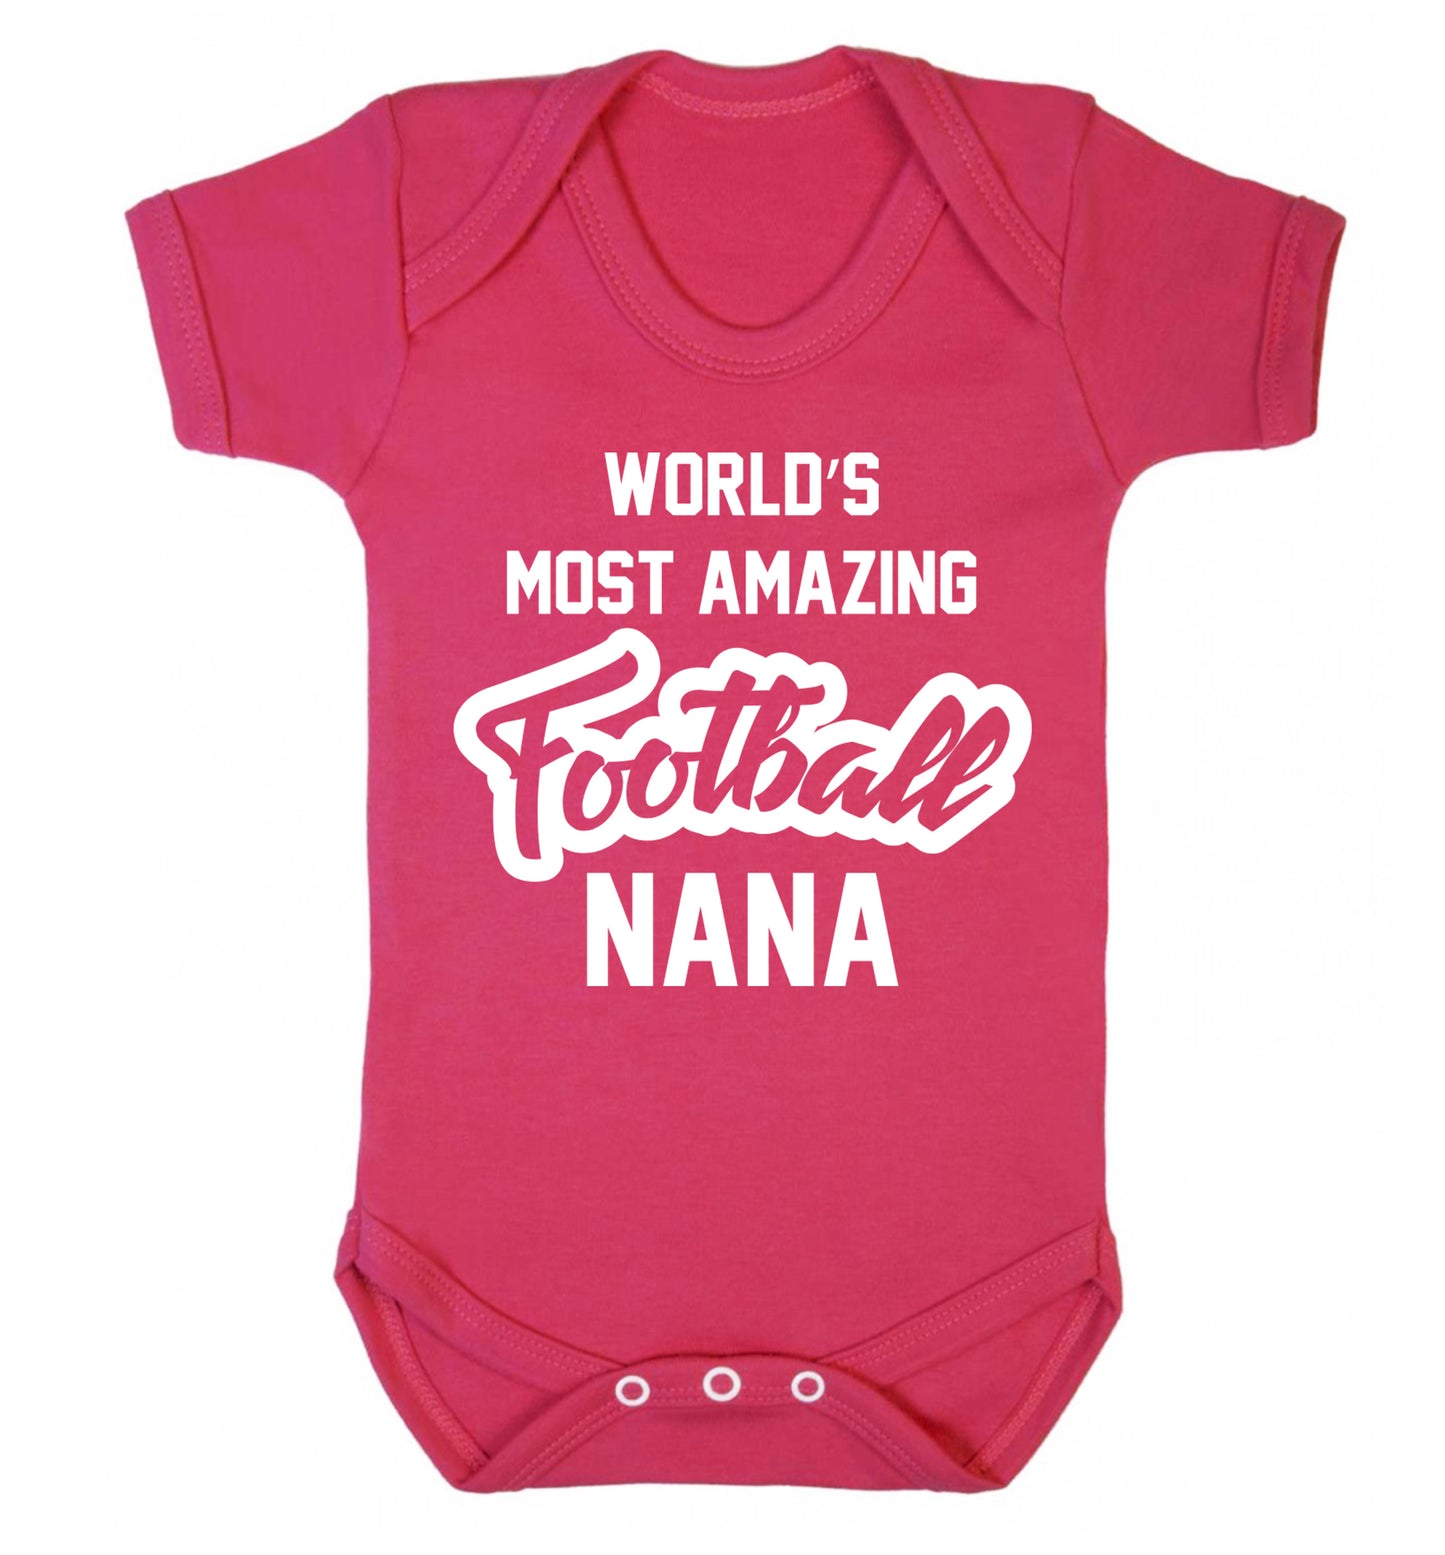 Worlds most amazing football nana Baby Vest dark pink 18-24 months